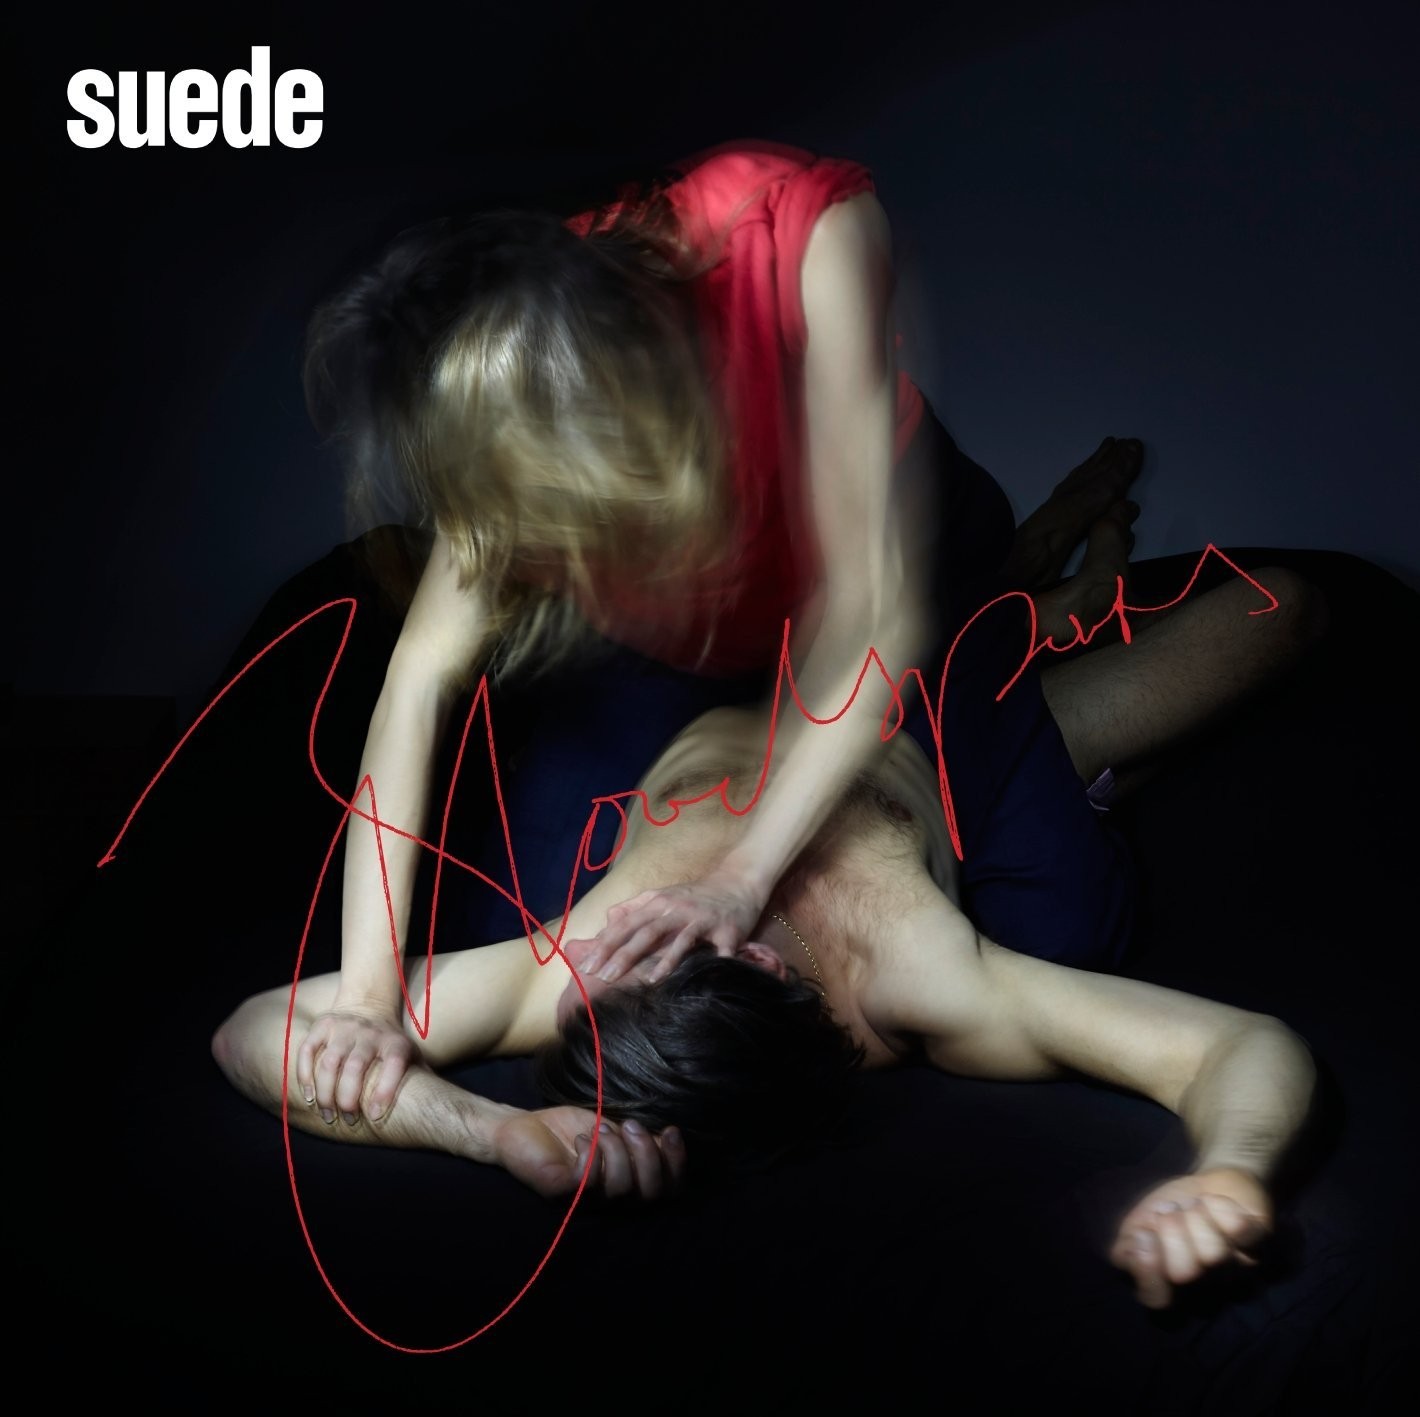 Suede - Bloodsports/Digipack (2013) 